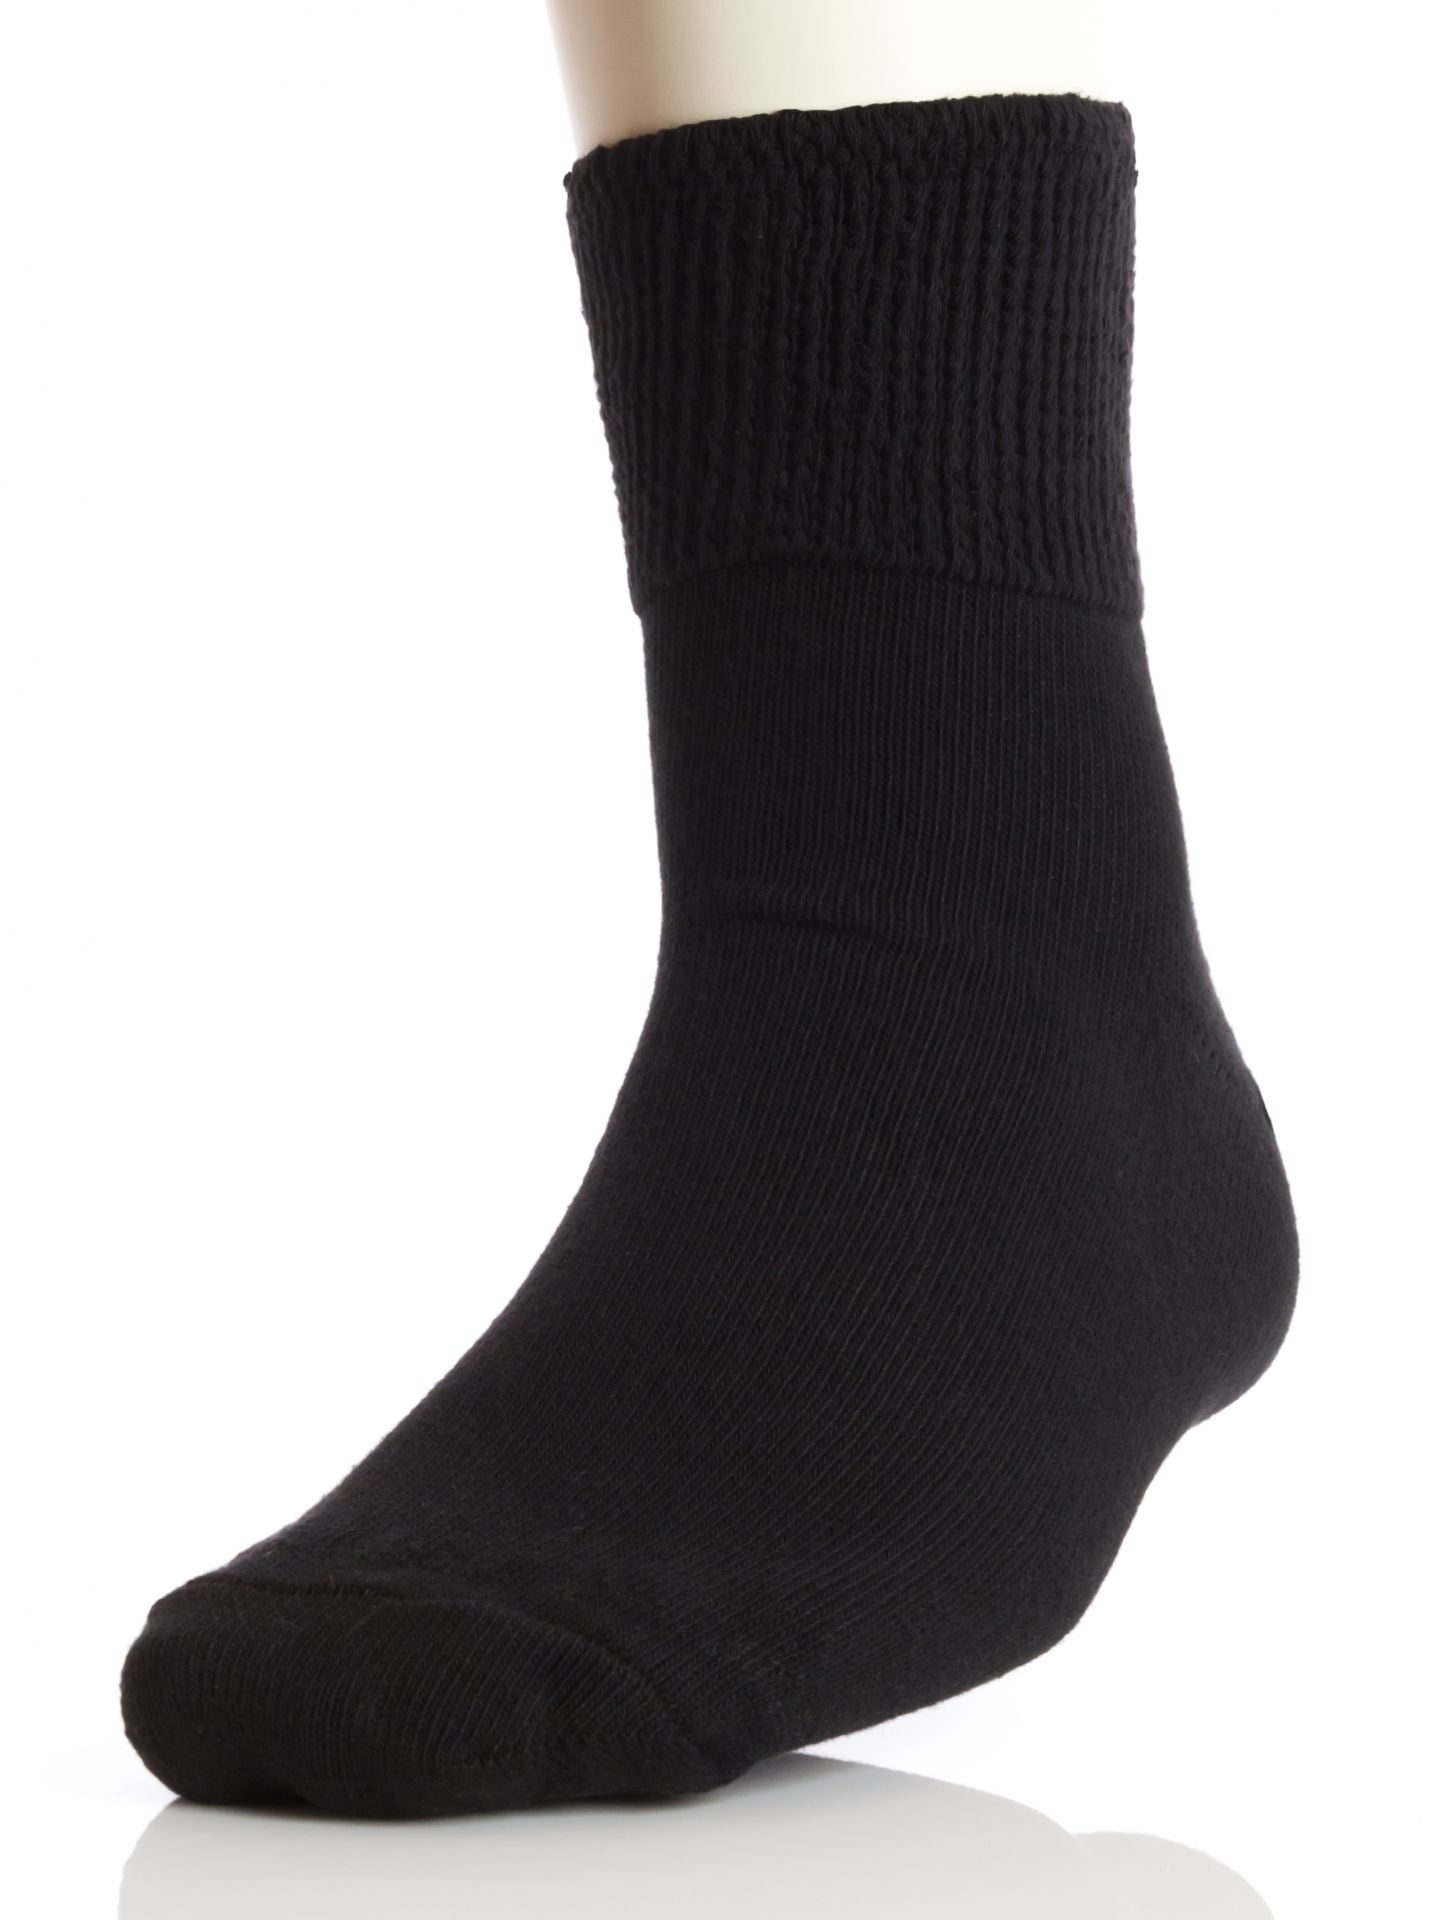 Extra Wide Socks Athletic Quarter Socks for Men (8-11 (up to 6E wide),  Black)